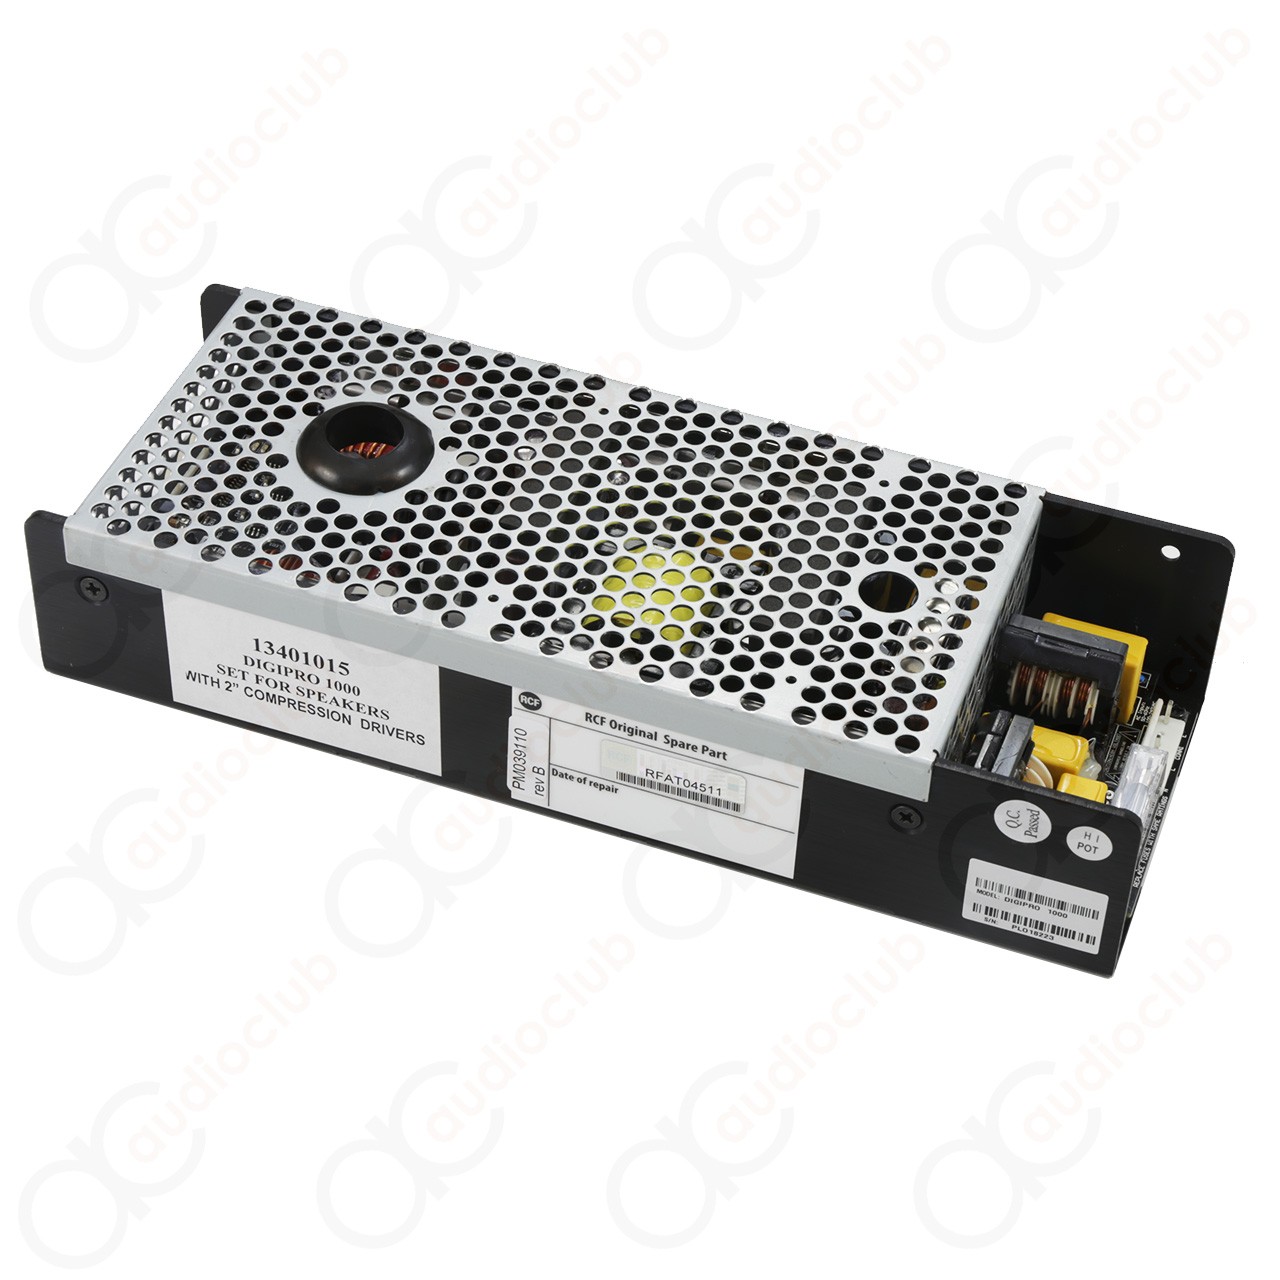 Kituri amplificare pro - Modul amplificare RCF Digipro 1000 + Driver inalte 2 inch, audioclub.ro